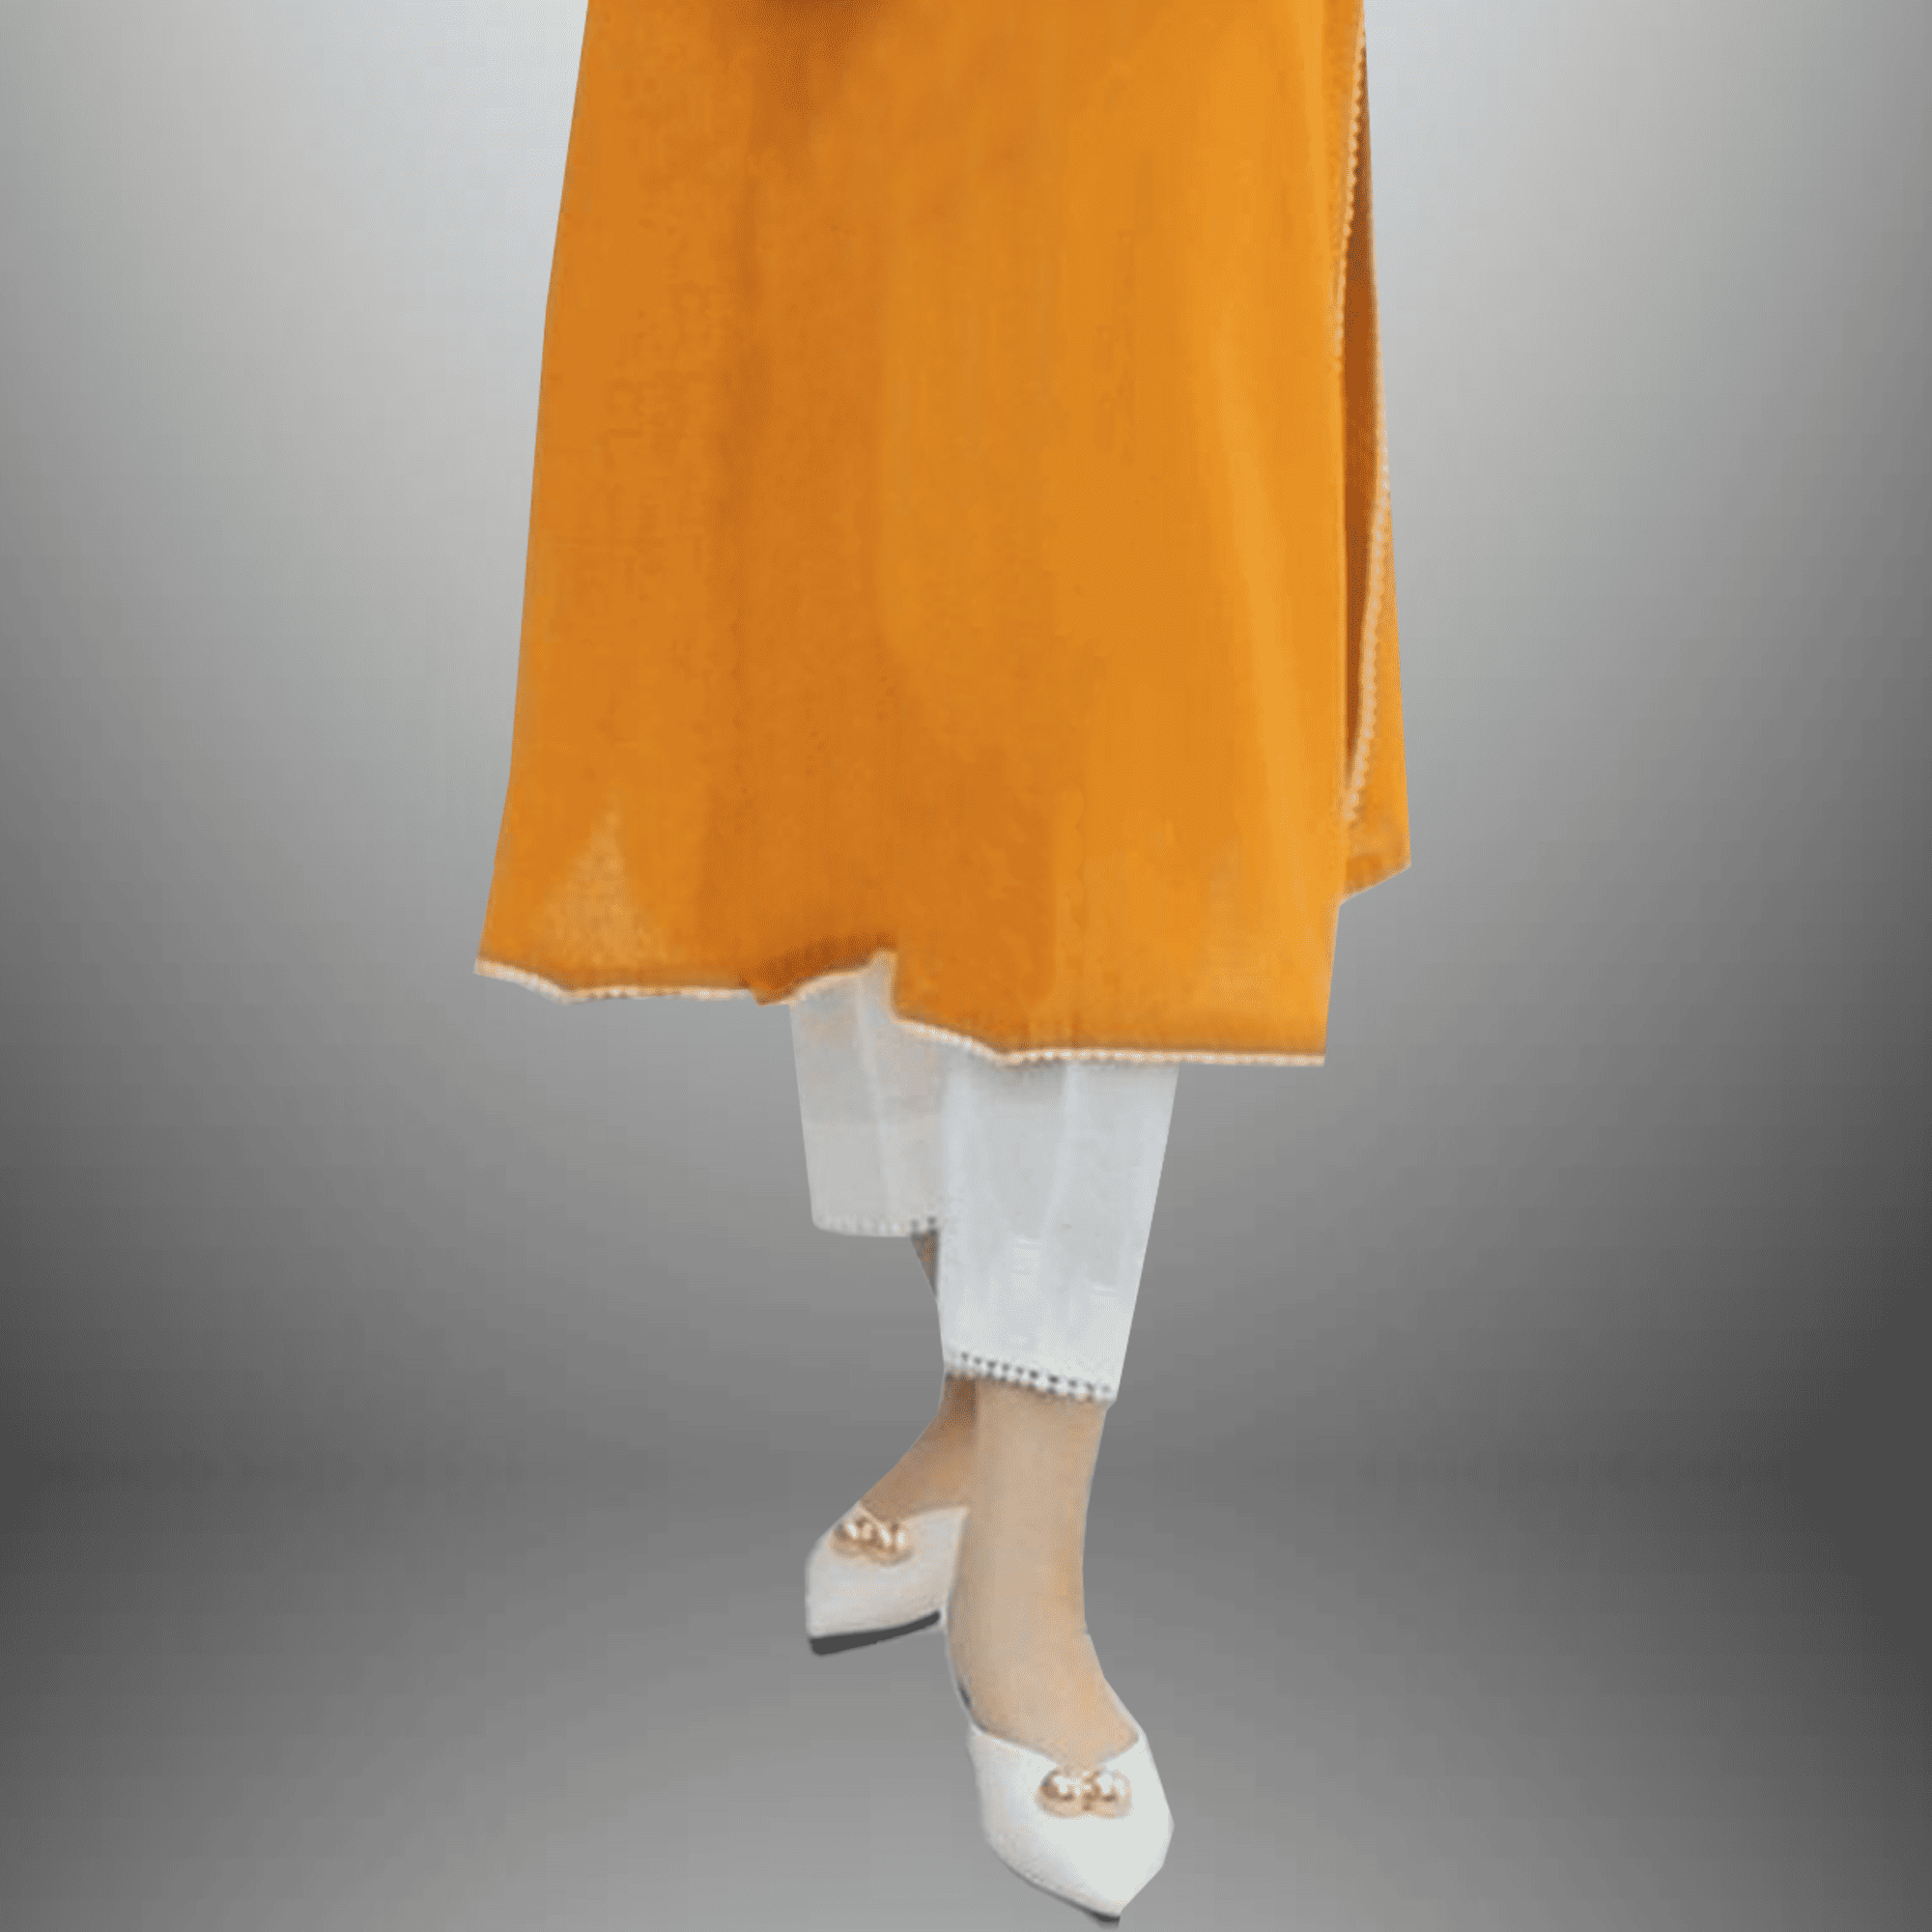 Women's orange full sleeve kurti with white pant-RWKS046